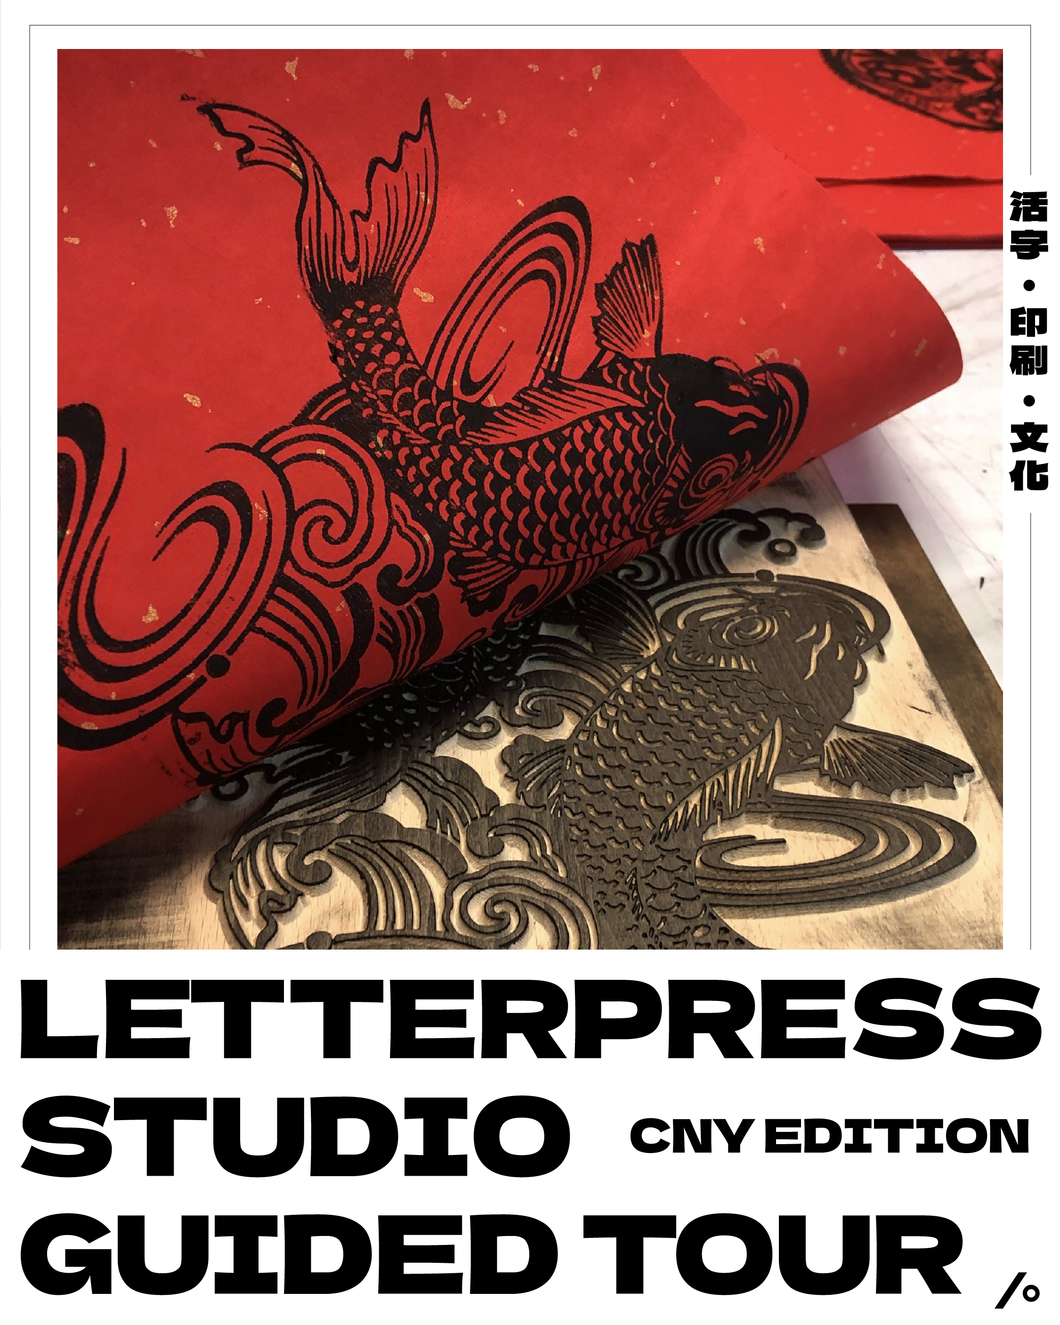 CC -  Letterpress Guided Tour - CNY Edition 活版印刷工作室导览 年画版印 (Eng/Chn)